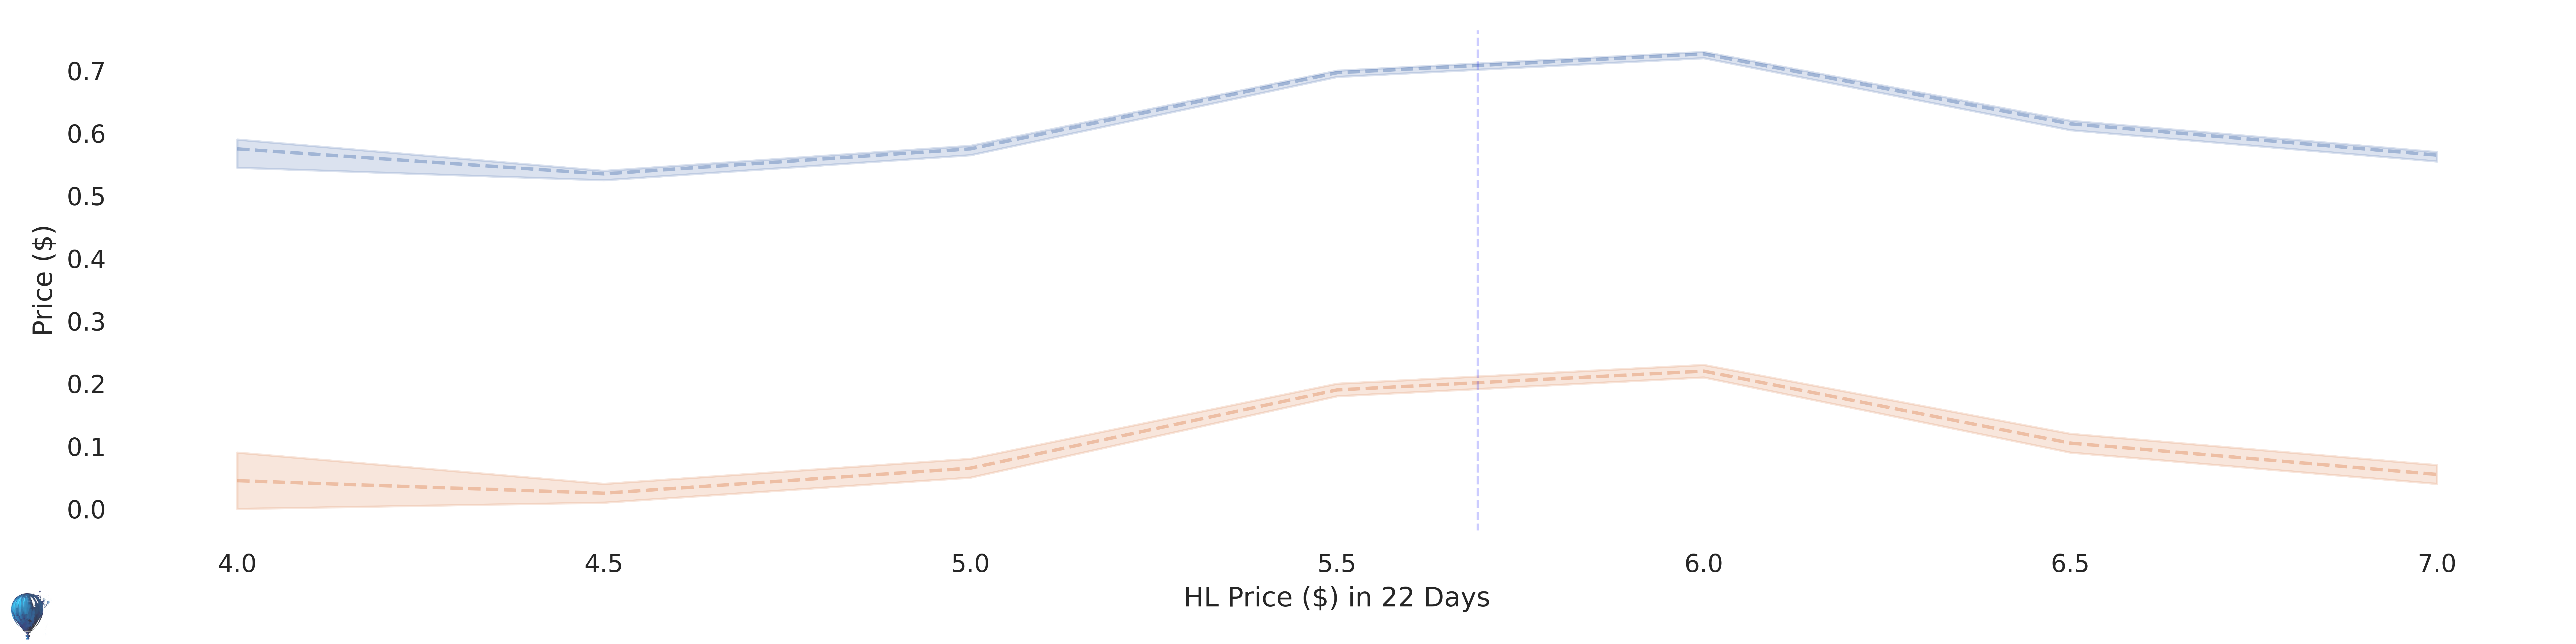 HL current options pricing